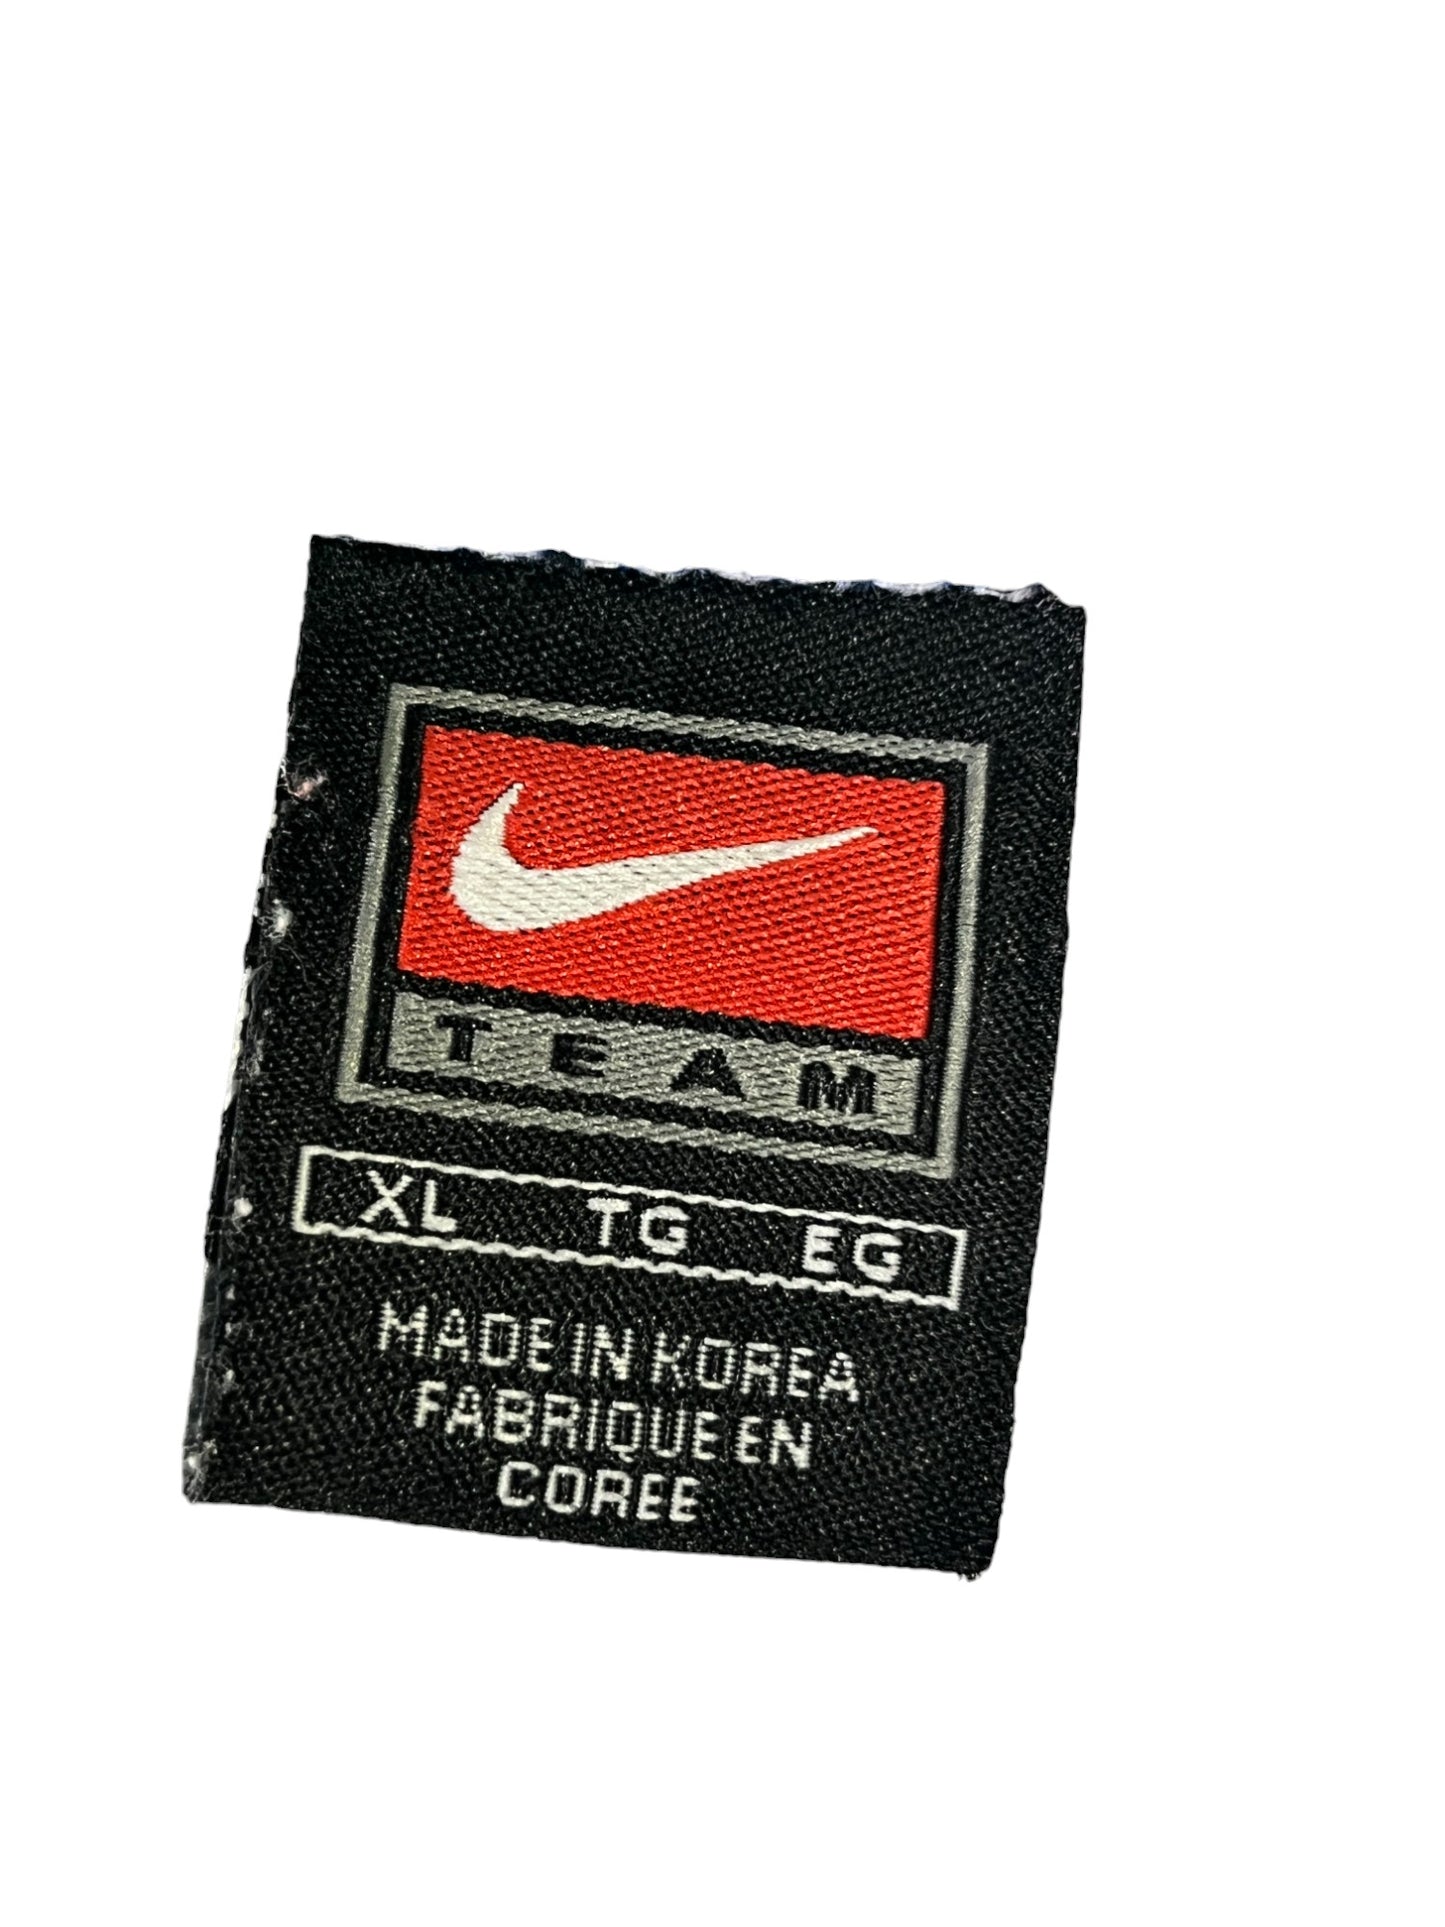 Vintage Nike Tracy McGrady Orlando Magic #1 Stitched White Jersey Size XL